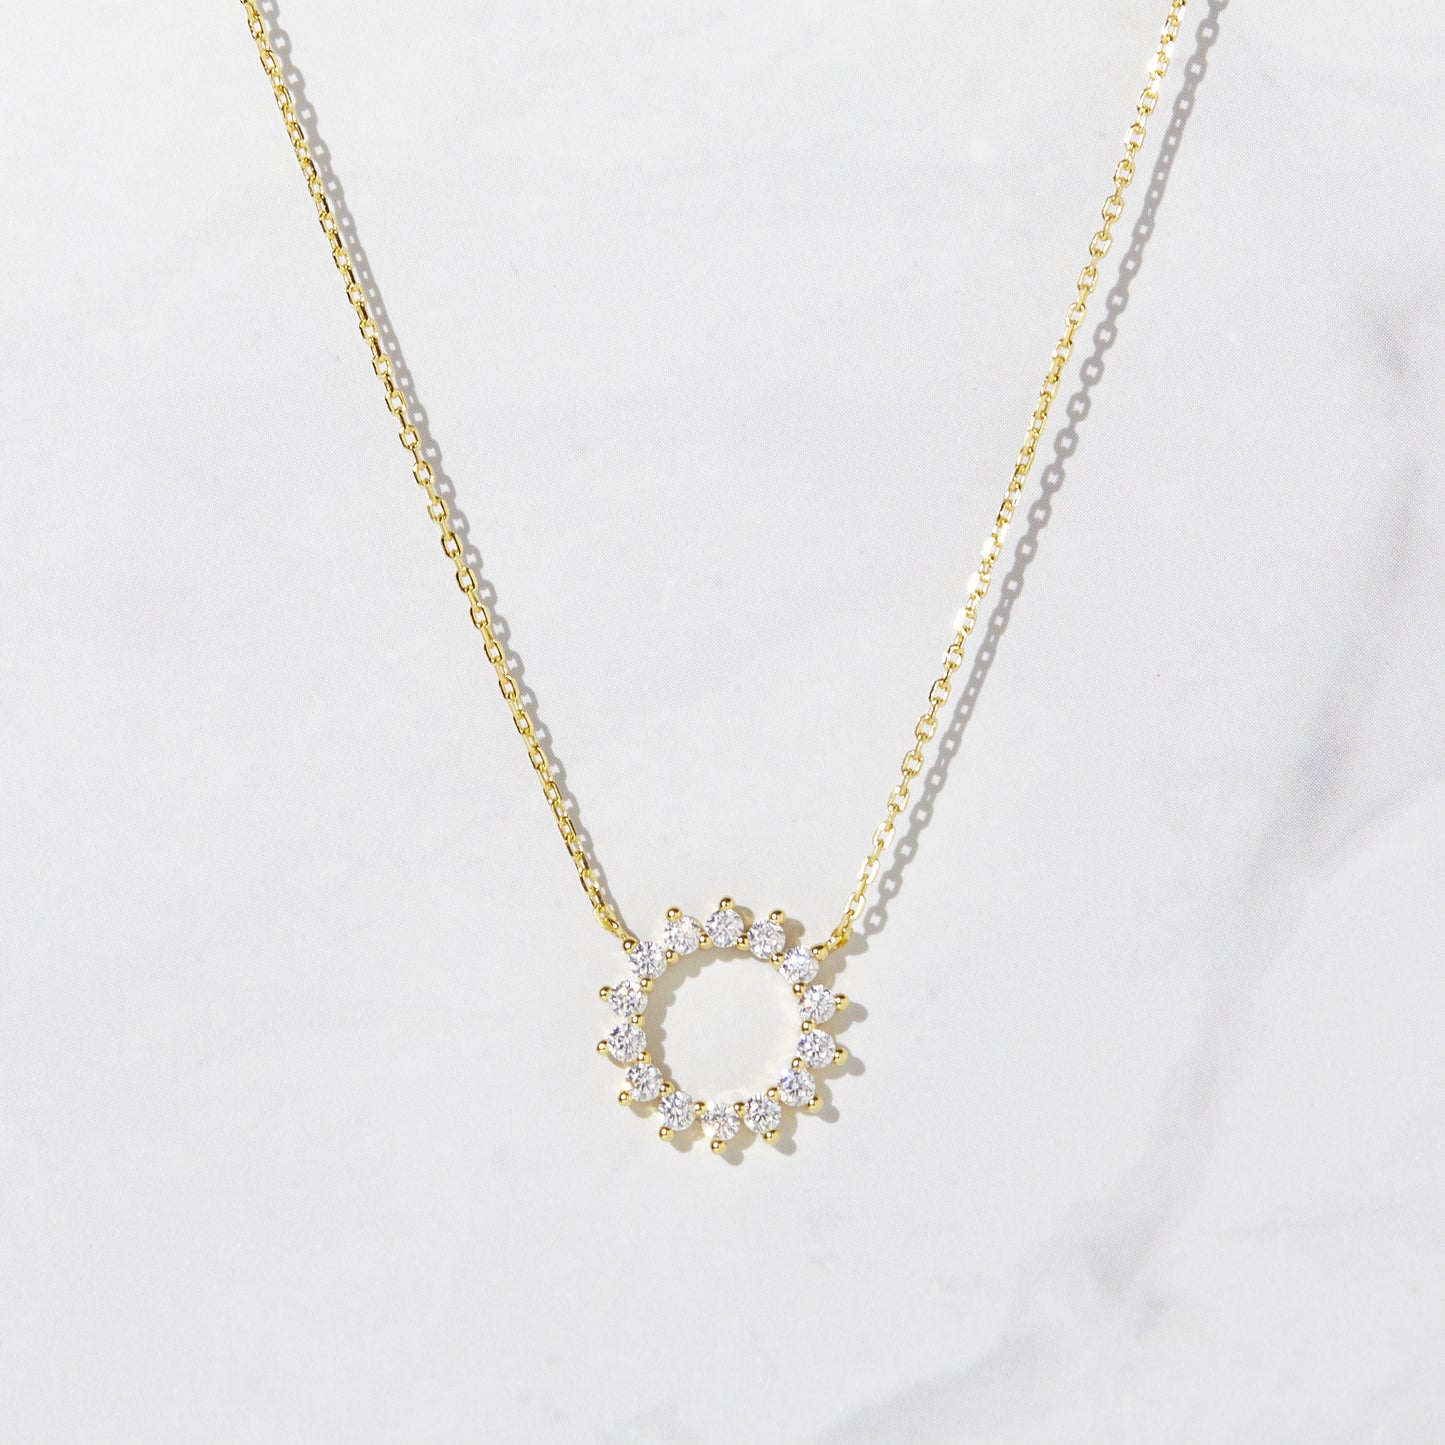 Daryl-Ann's Sunburst Necklace